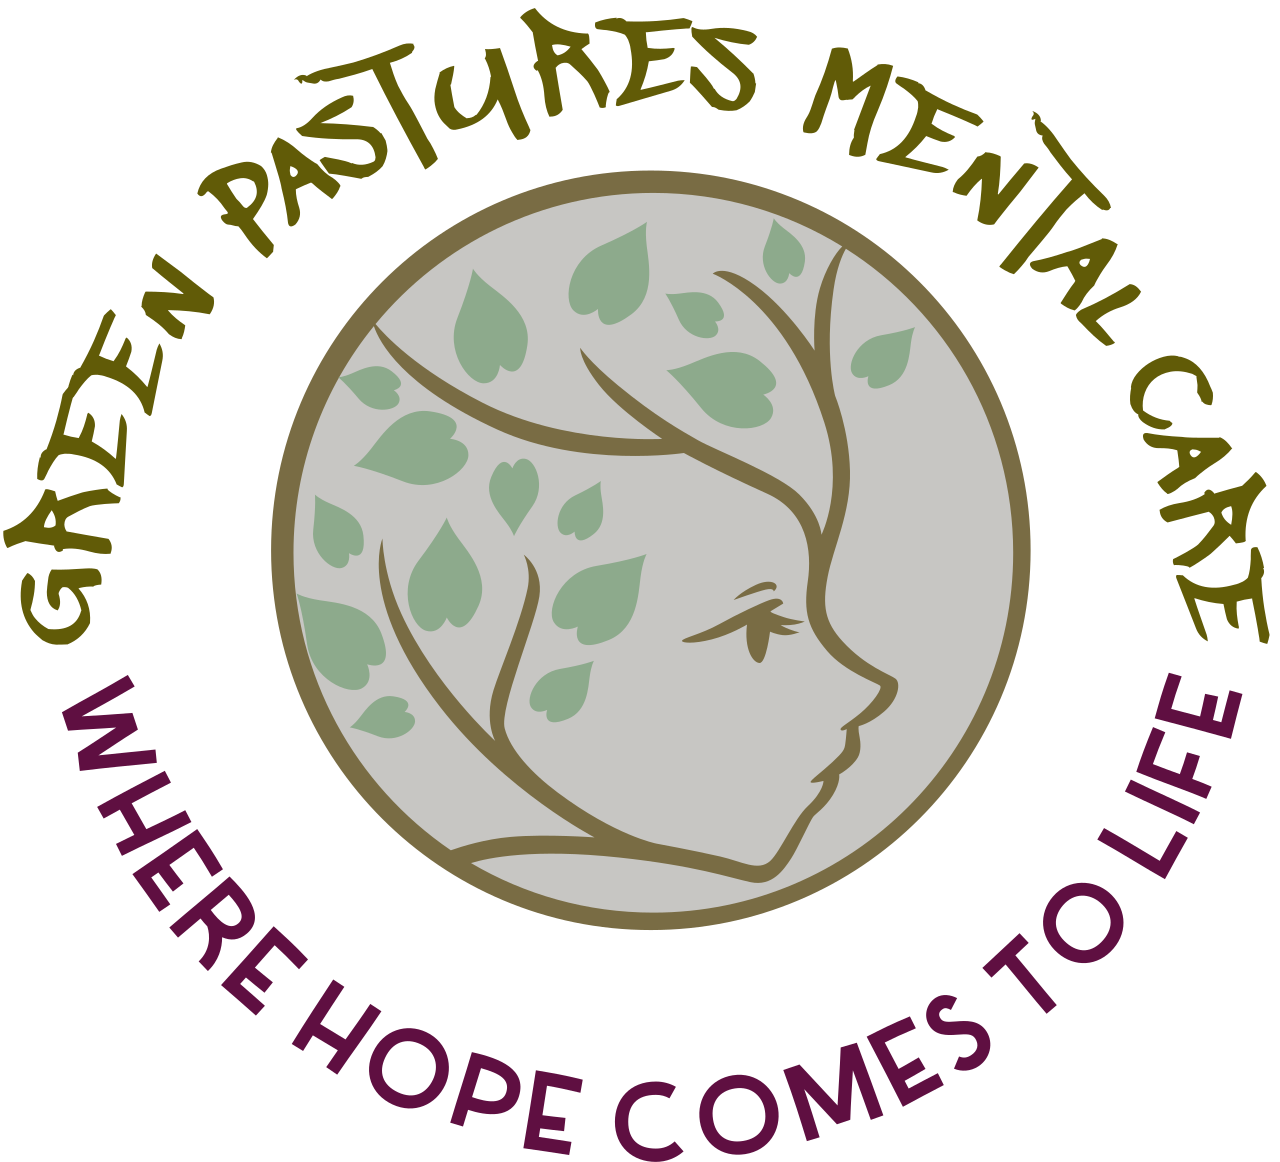 GREEN PASTURES MENTAL CARE's logo